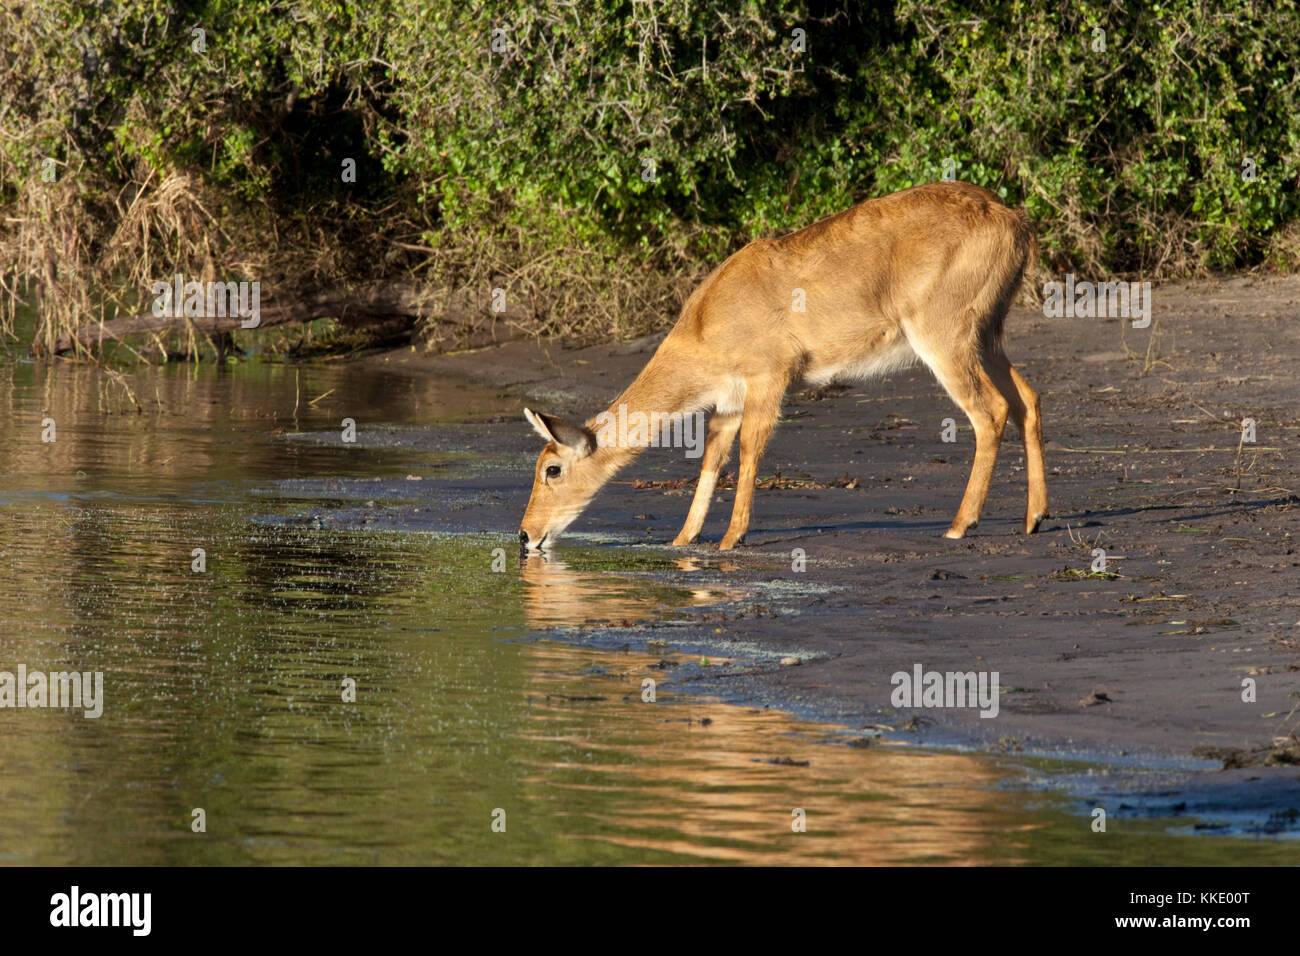 Animal puku wildlife hi-res stock photography and images - Alamy